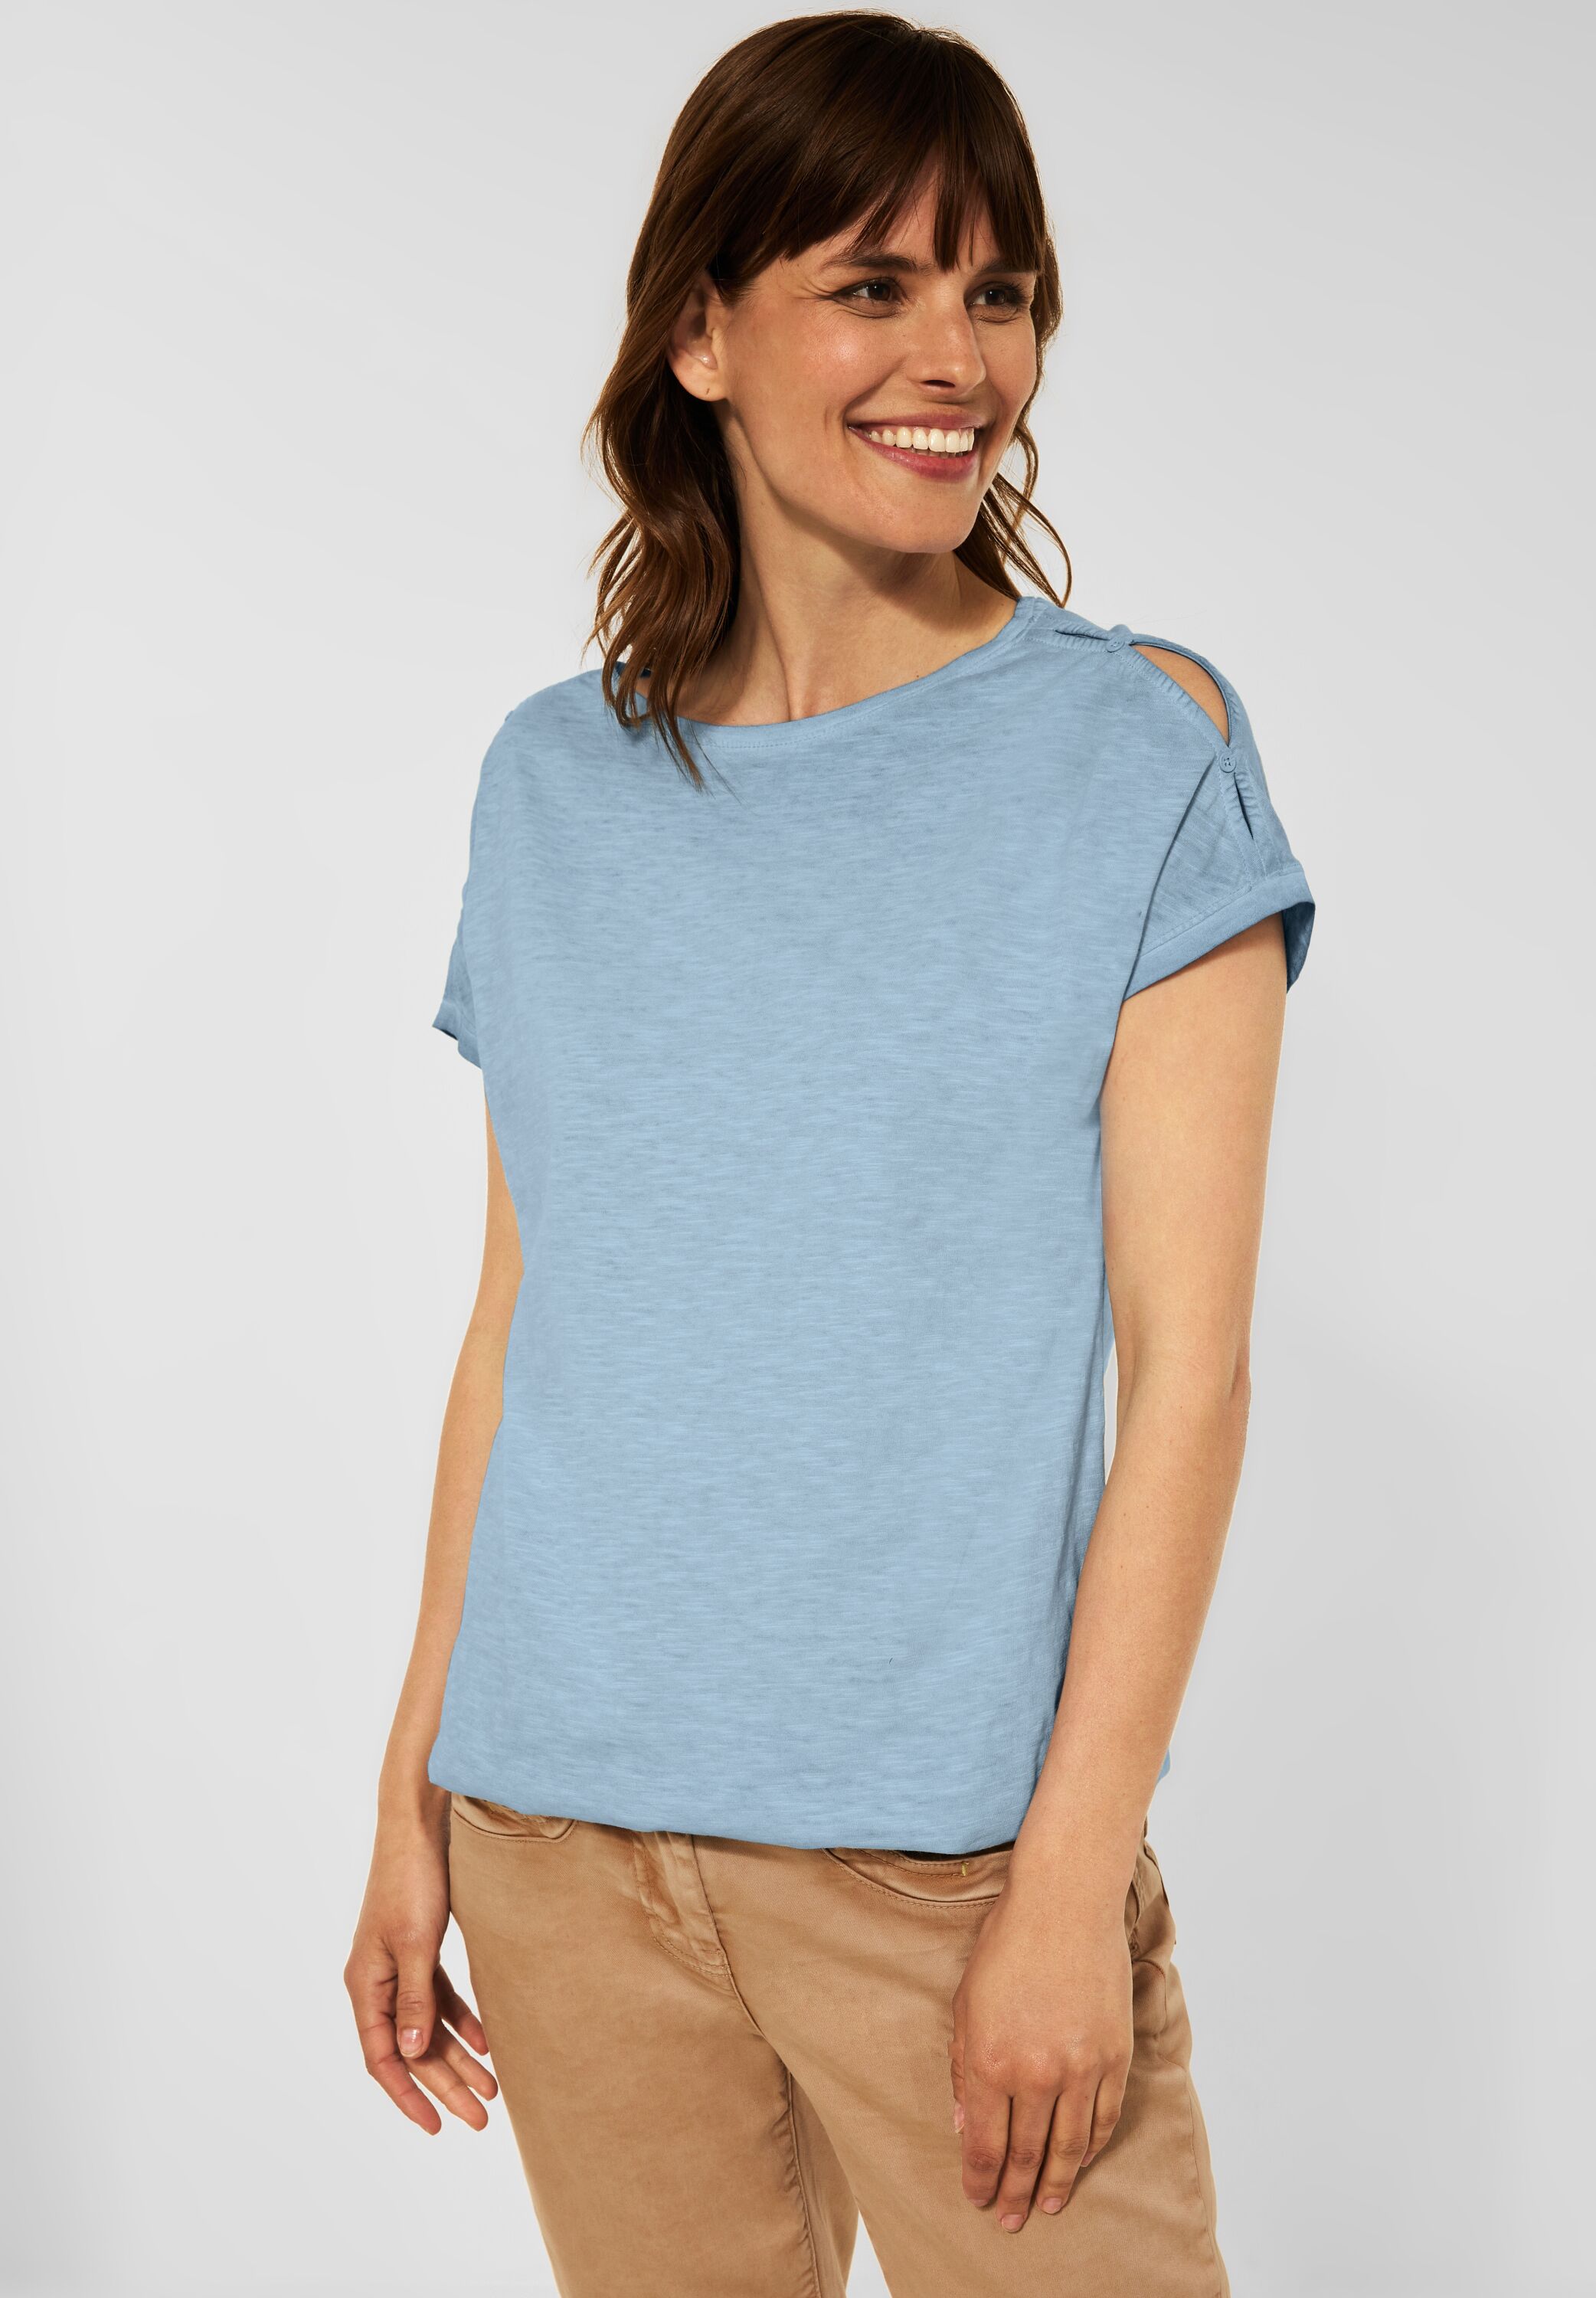 CECIL T-Shirt in Inka Blue im SALE reduziert B317979-13908 - CONCEPT Mode